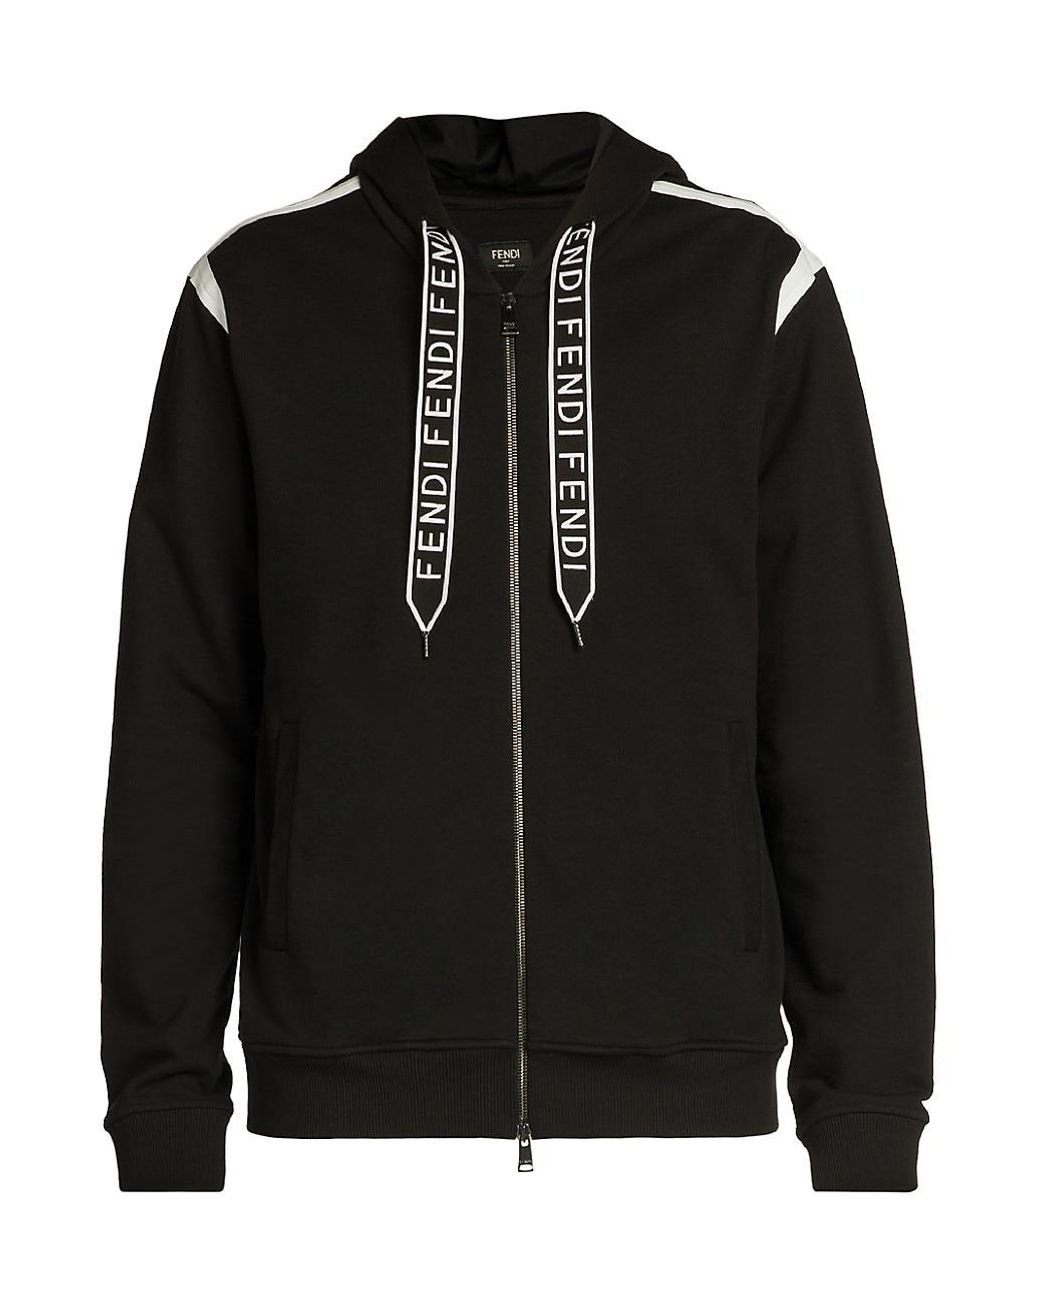 Fendi Cotton Logo Tape Zip-up Hoodie in Nero (Black) for Men - Lyst